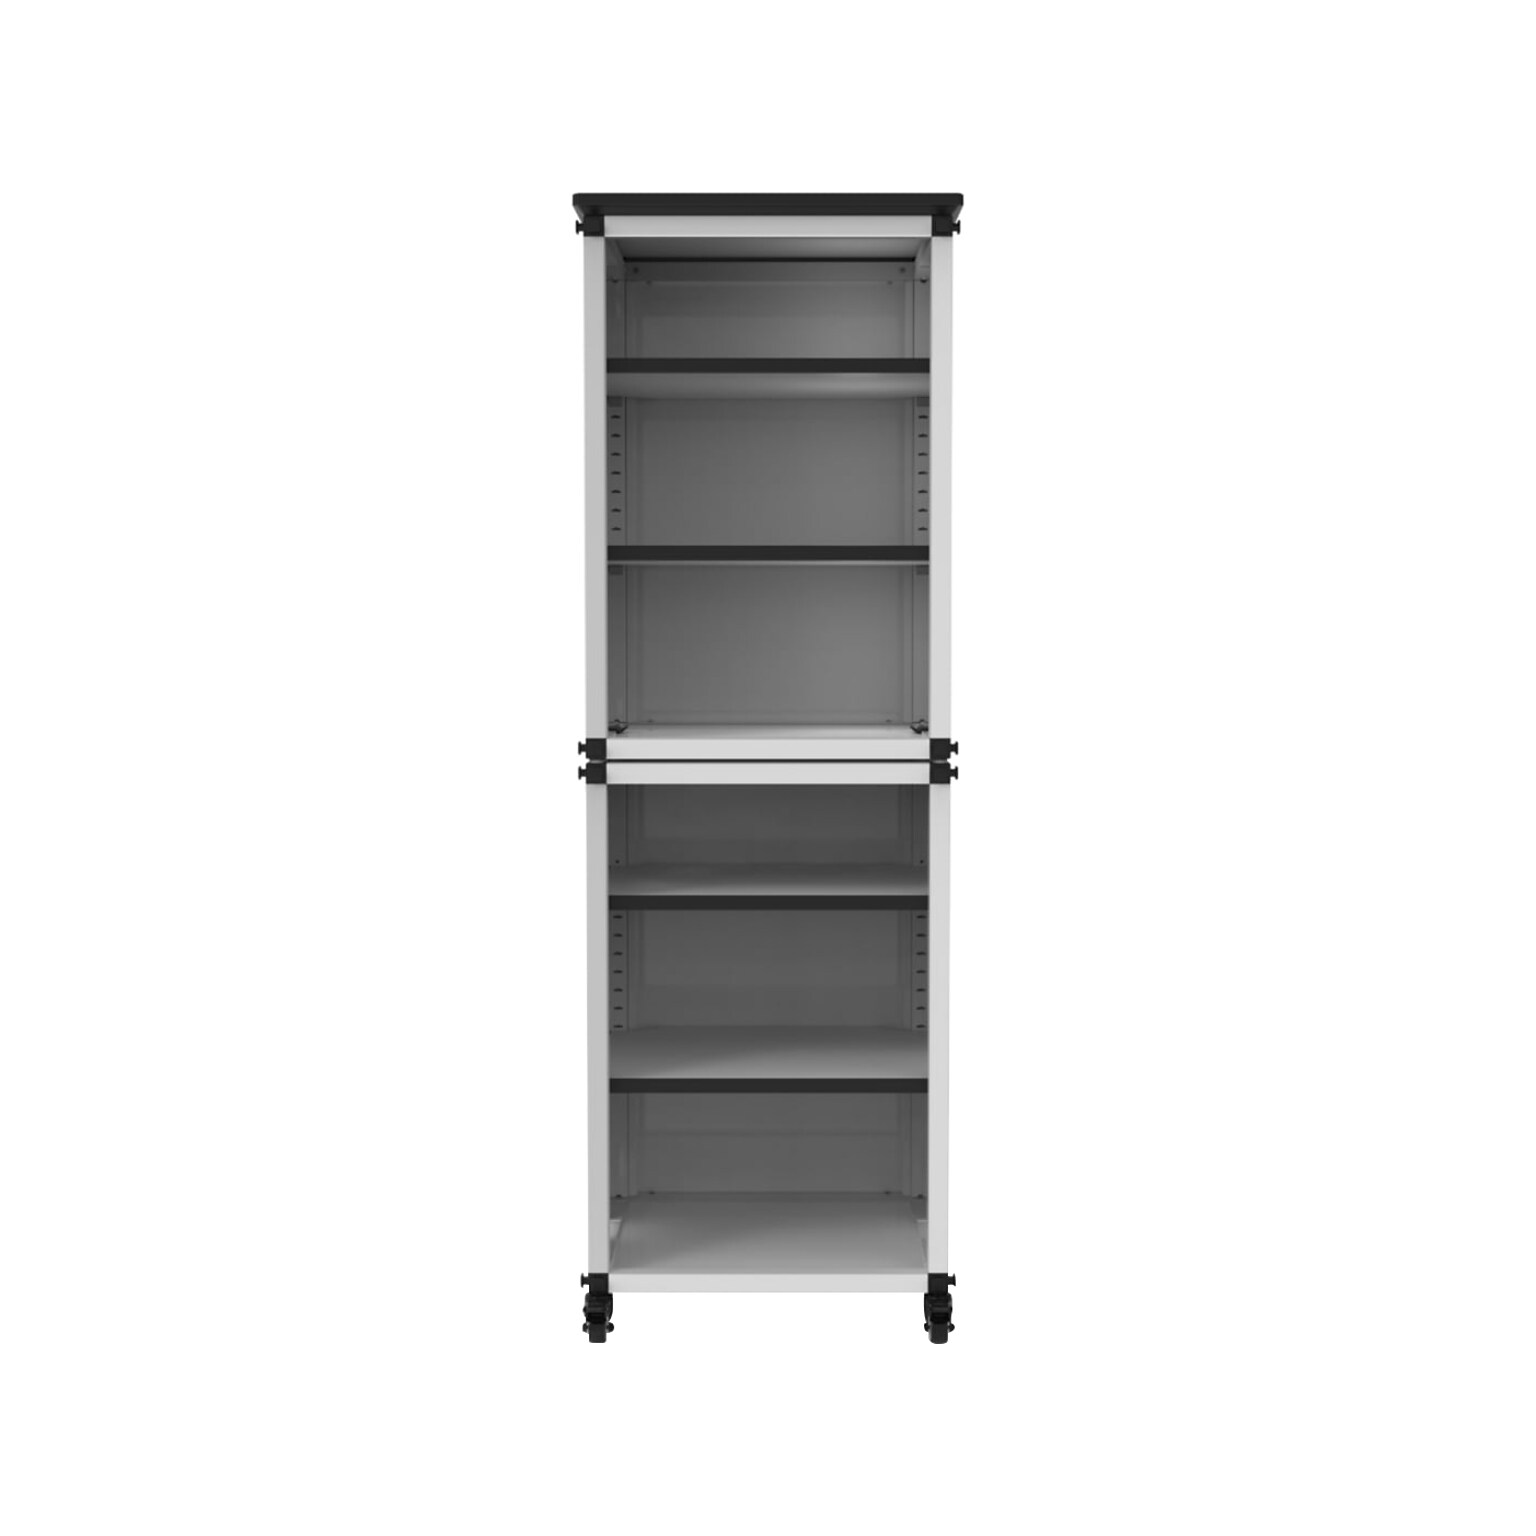 Luxor Mobile 6-Section Modular Classroom Bookshelf, 54.5H x 18.25W x 18.25D, White (MBSCB06)